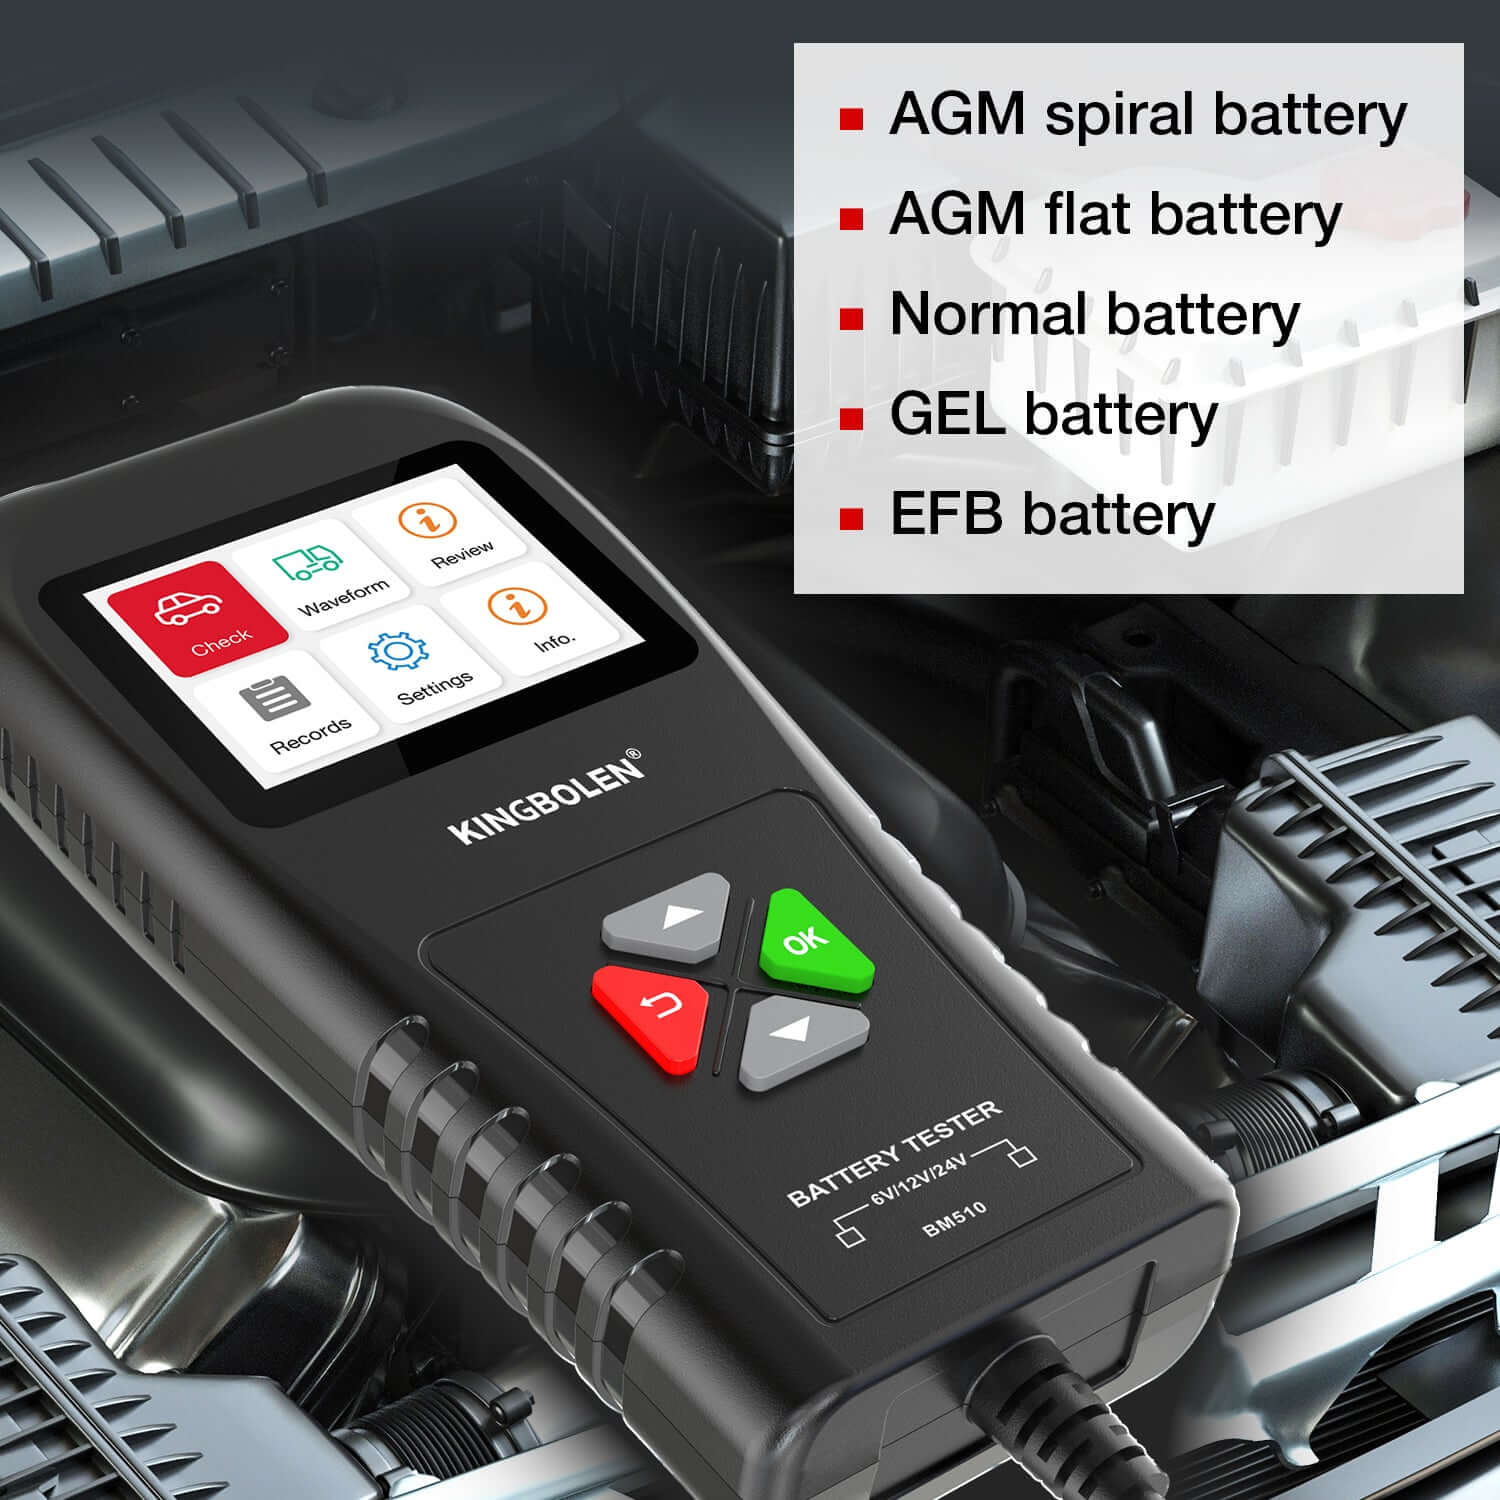 KINGBOLEN BM510 Car Battery Tester can test a variety of models